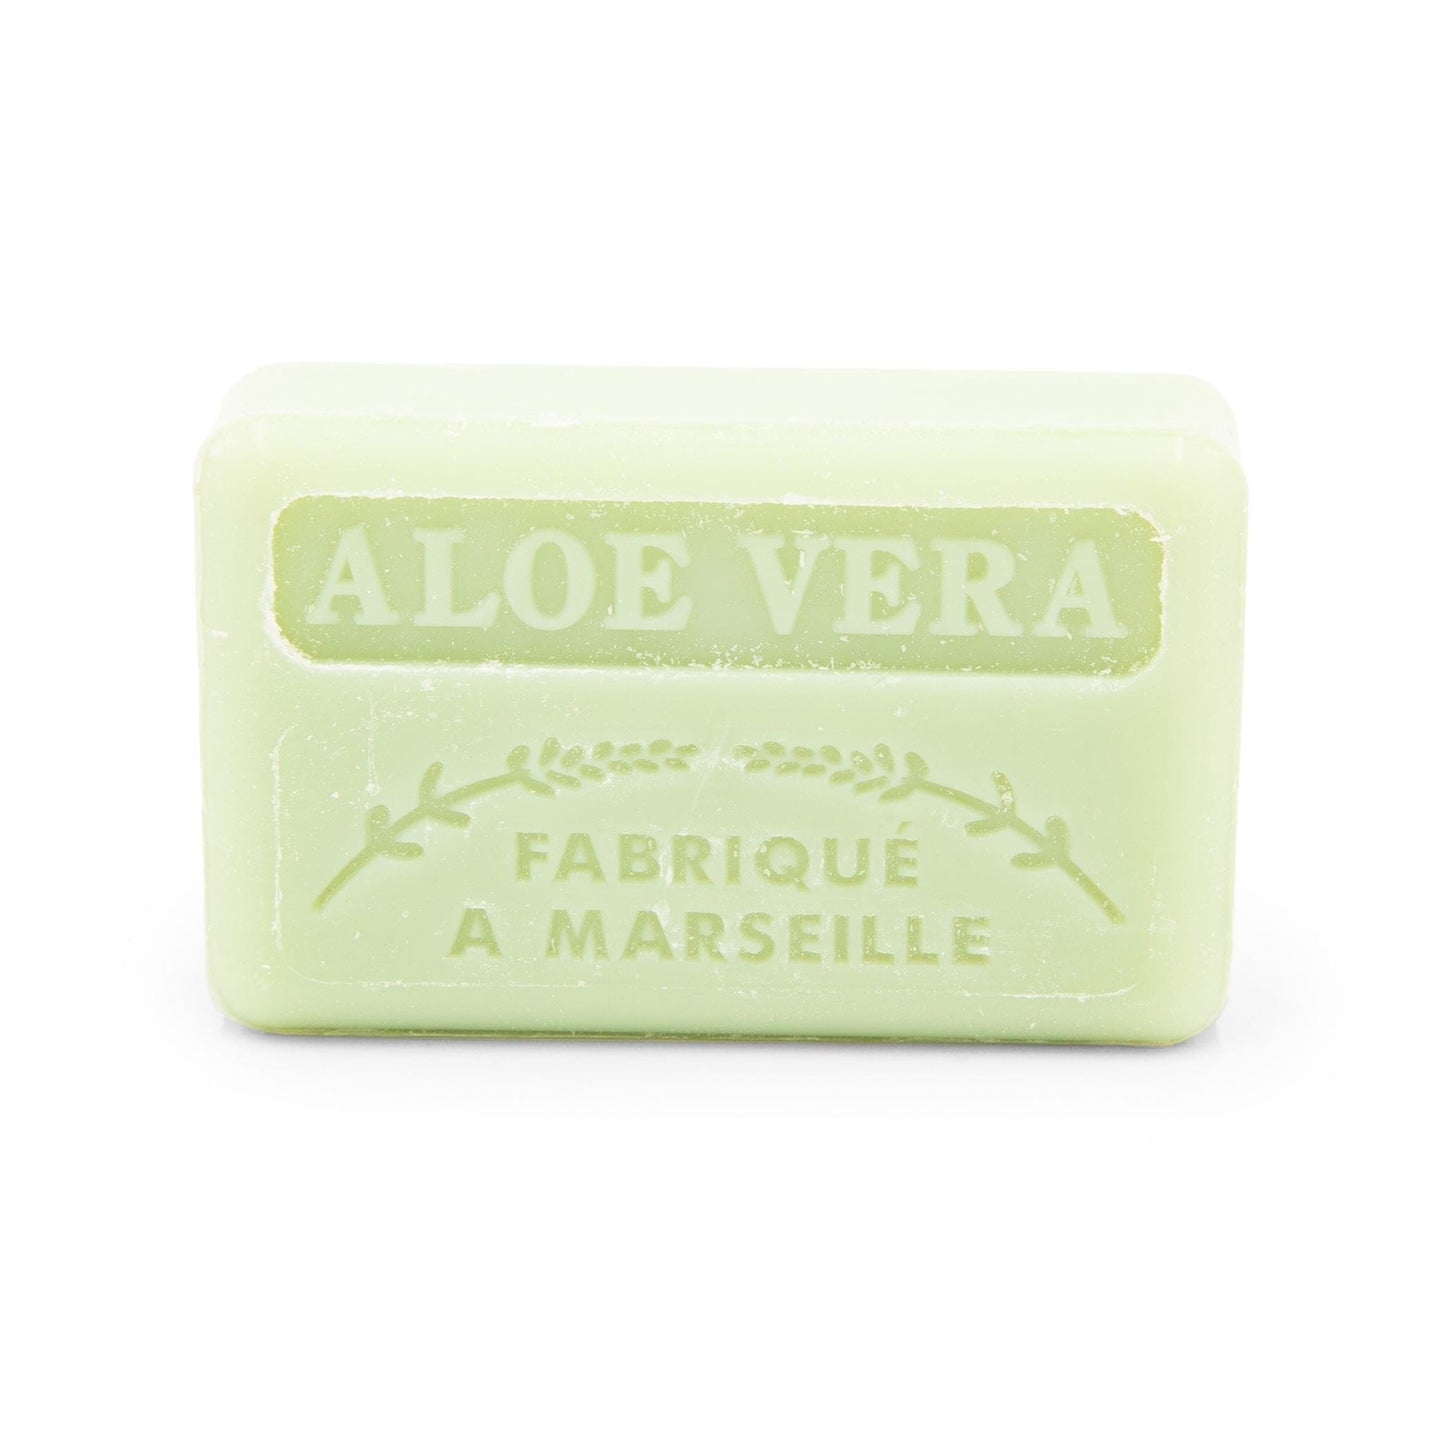 Savon de Marseille Soap Marseille Soap Bar with Organic Shea Butter - 125g - Aloe Vera